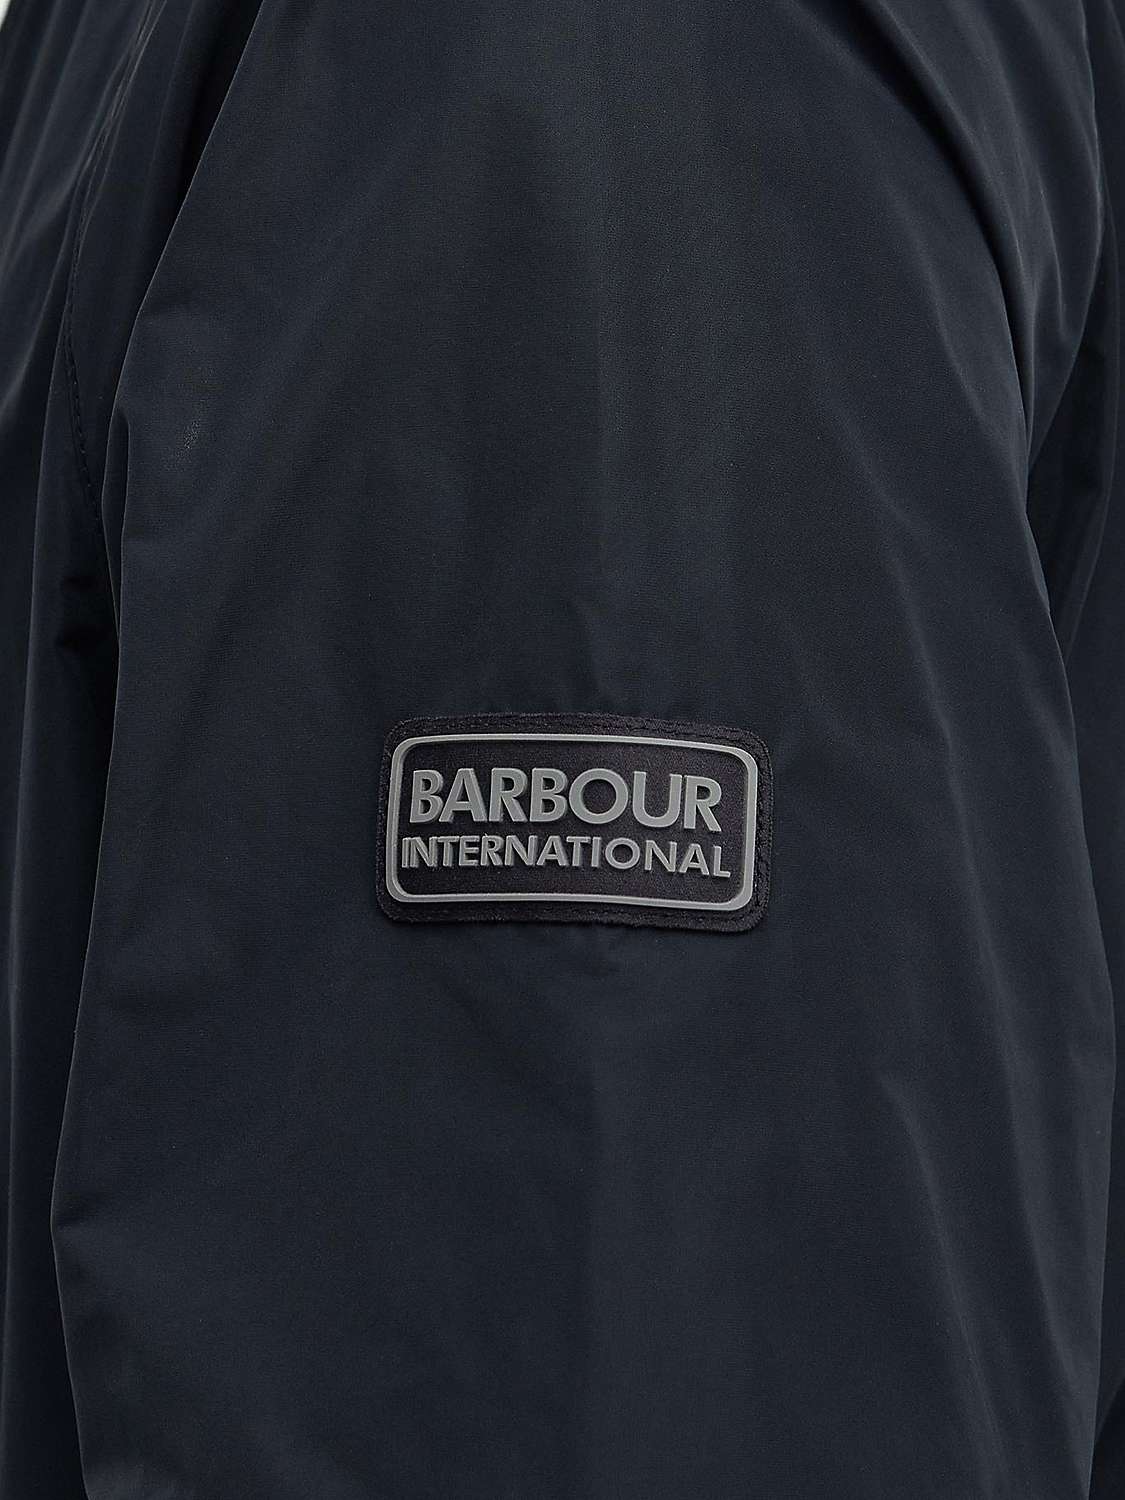 Buy Barbour International Beckett Showerproof Jacket, Black Online at johnlewis.com